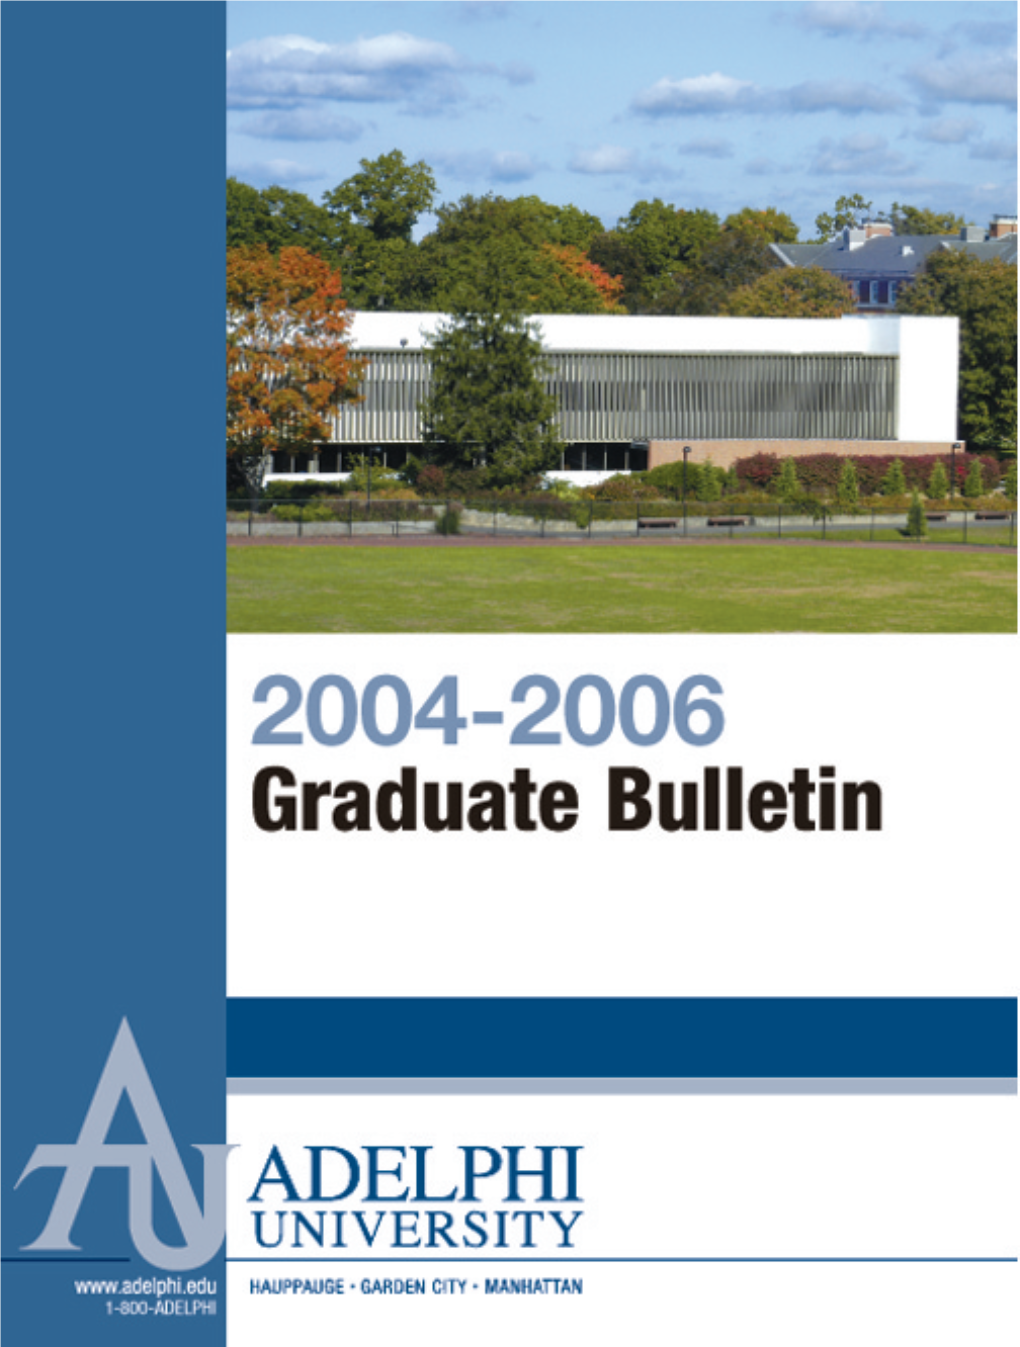 Graduate-Bulletin-2004-2006.Pdf